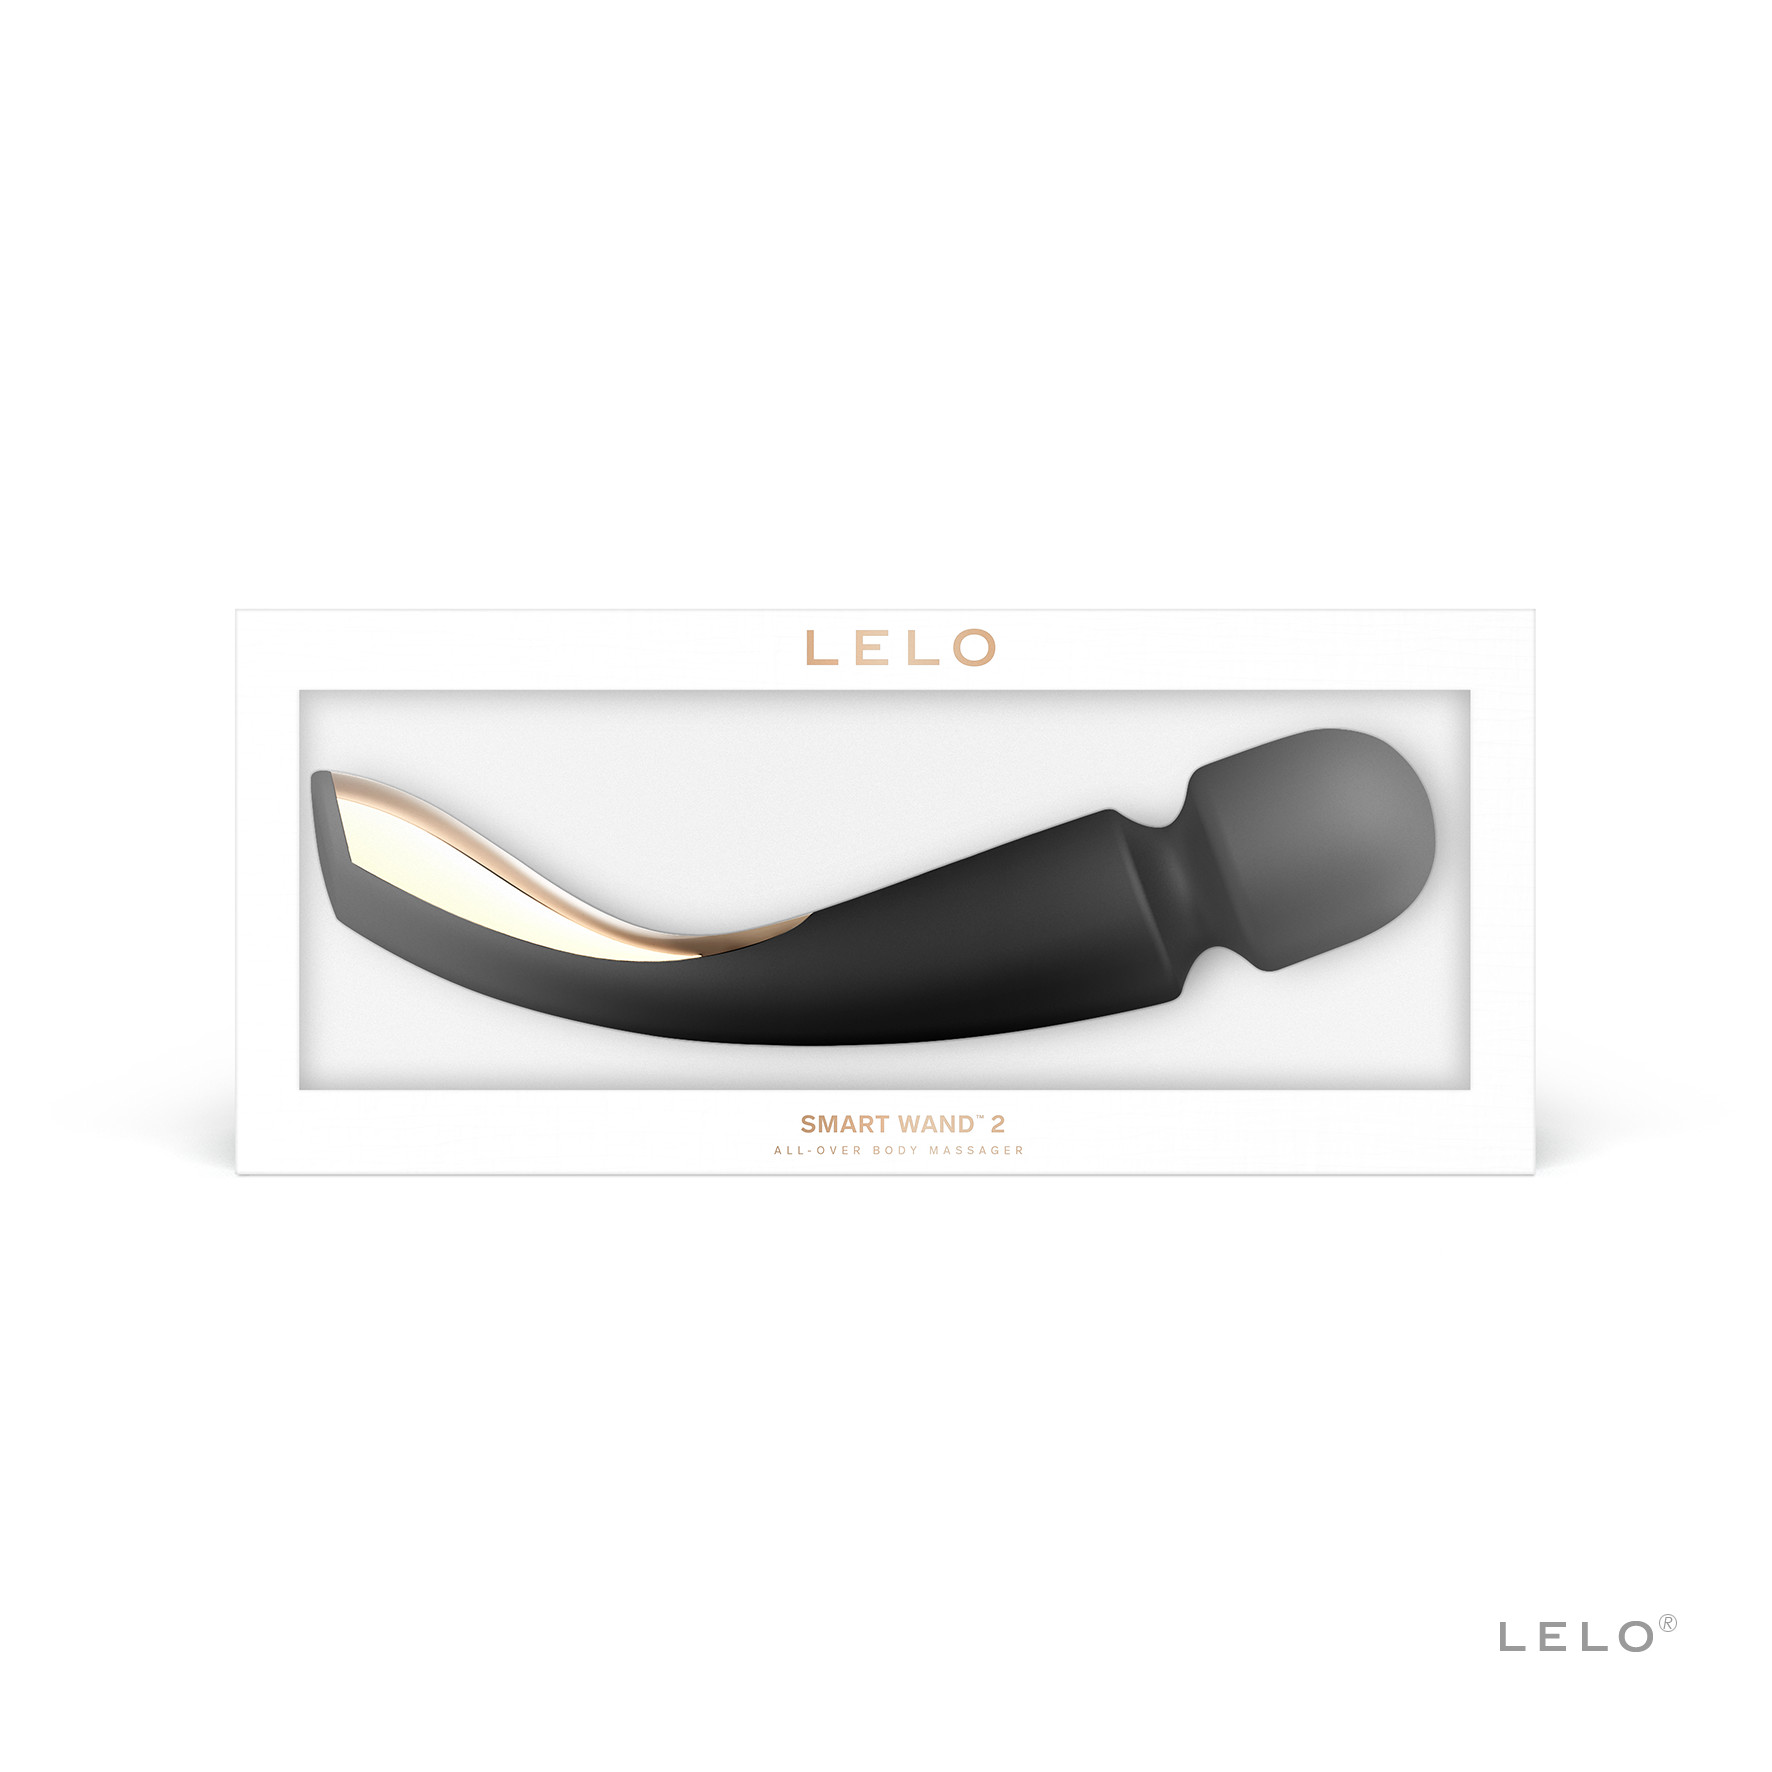 LELO SMART Wand 2 Large, Black, Luxurious Full-Body Waterproof Massager With 10 Vibration Settings - image 2 of 4